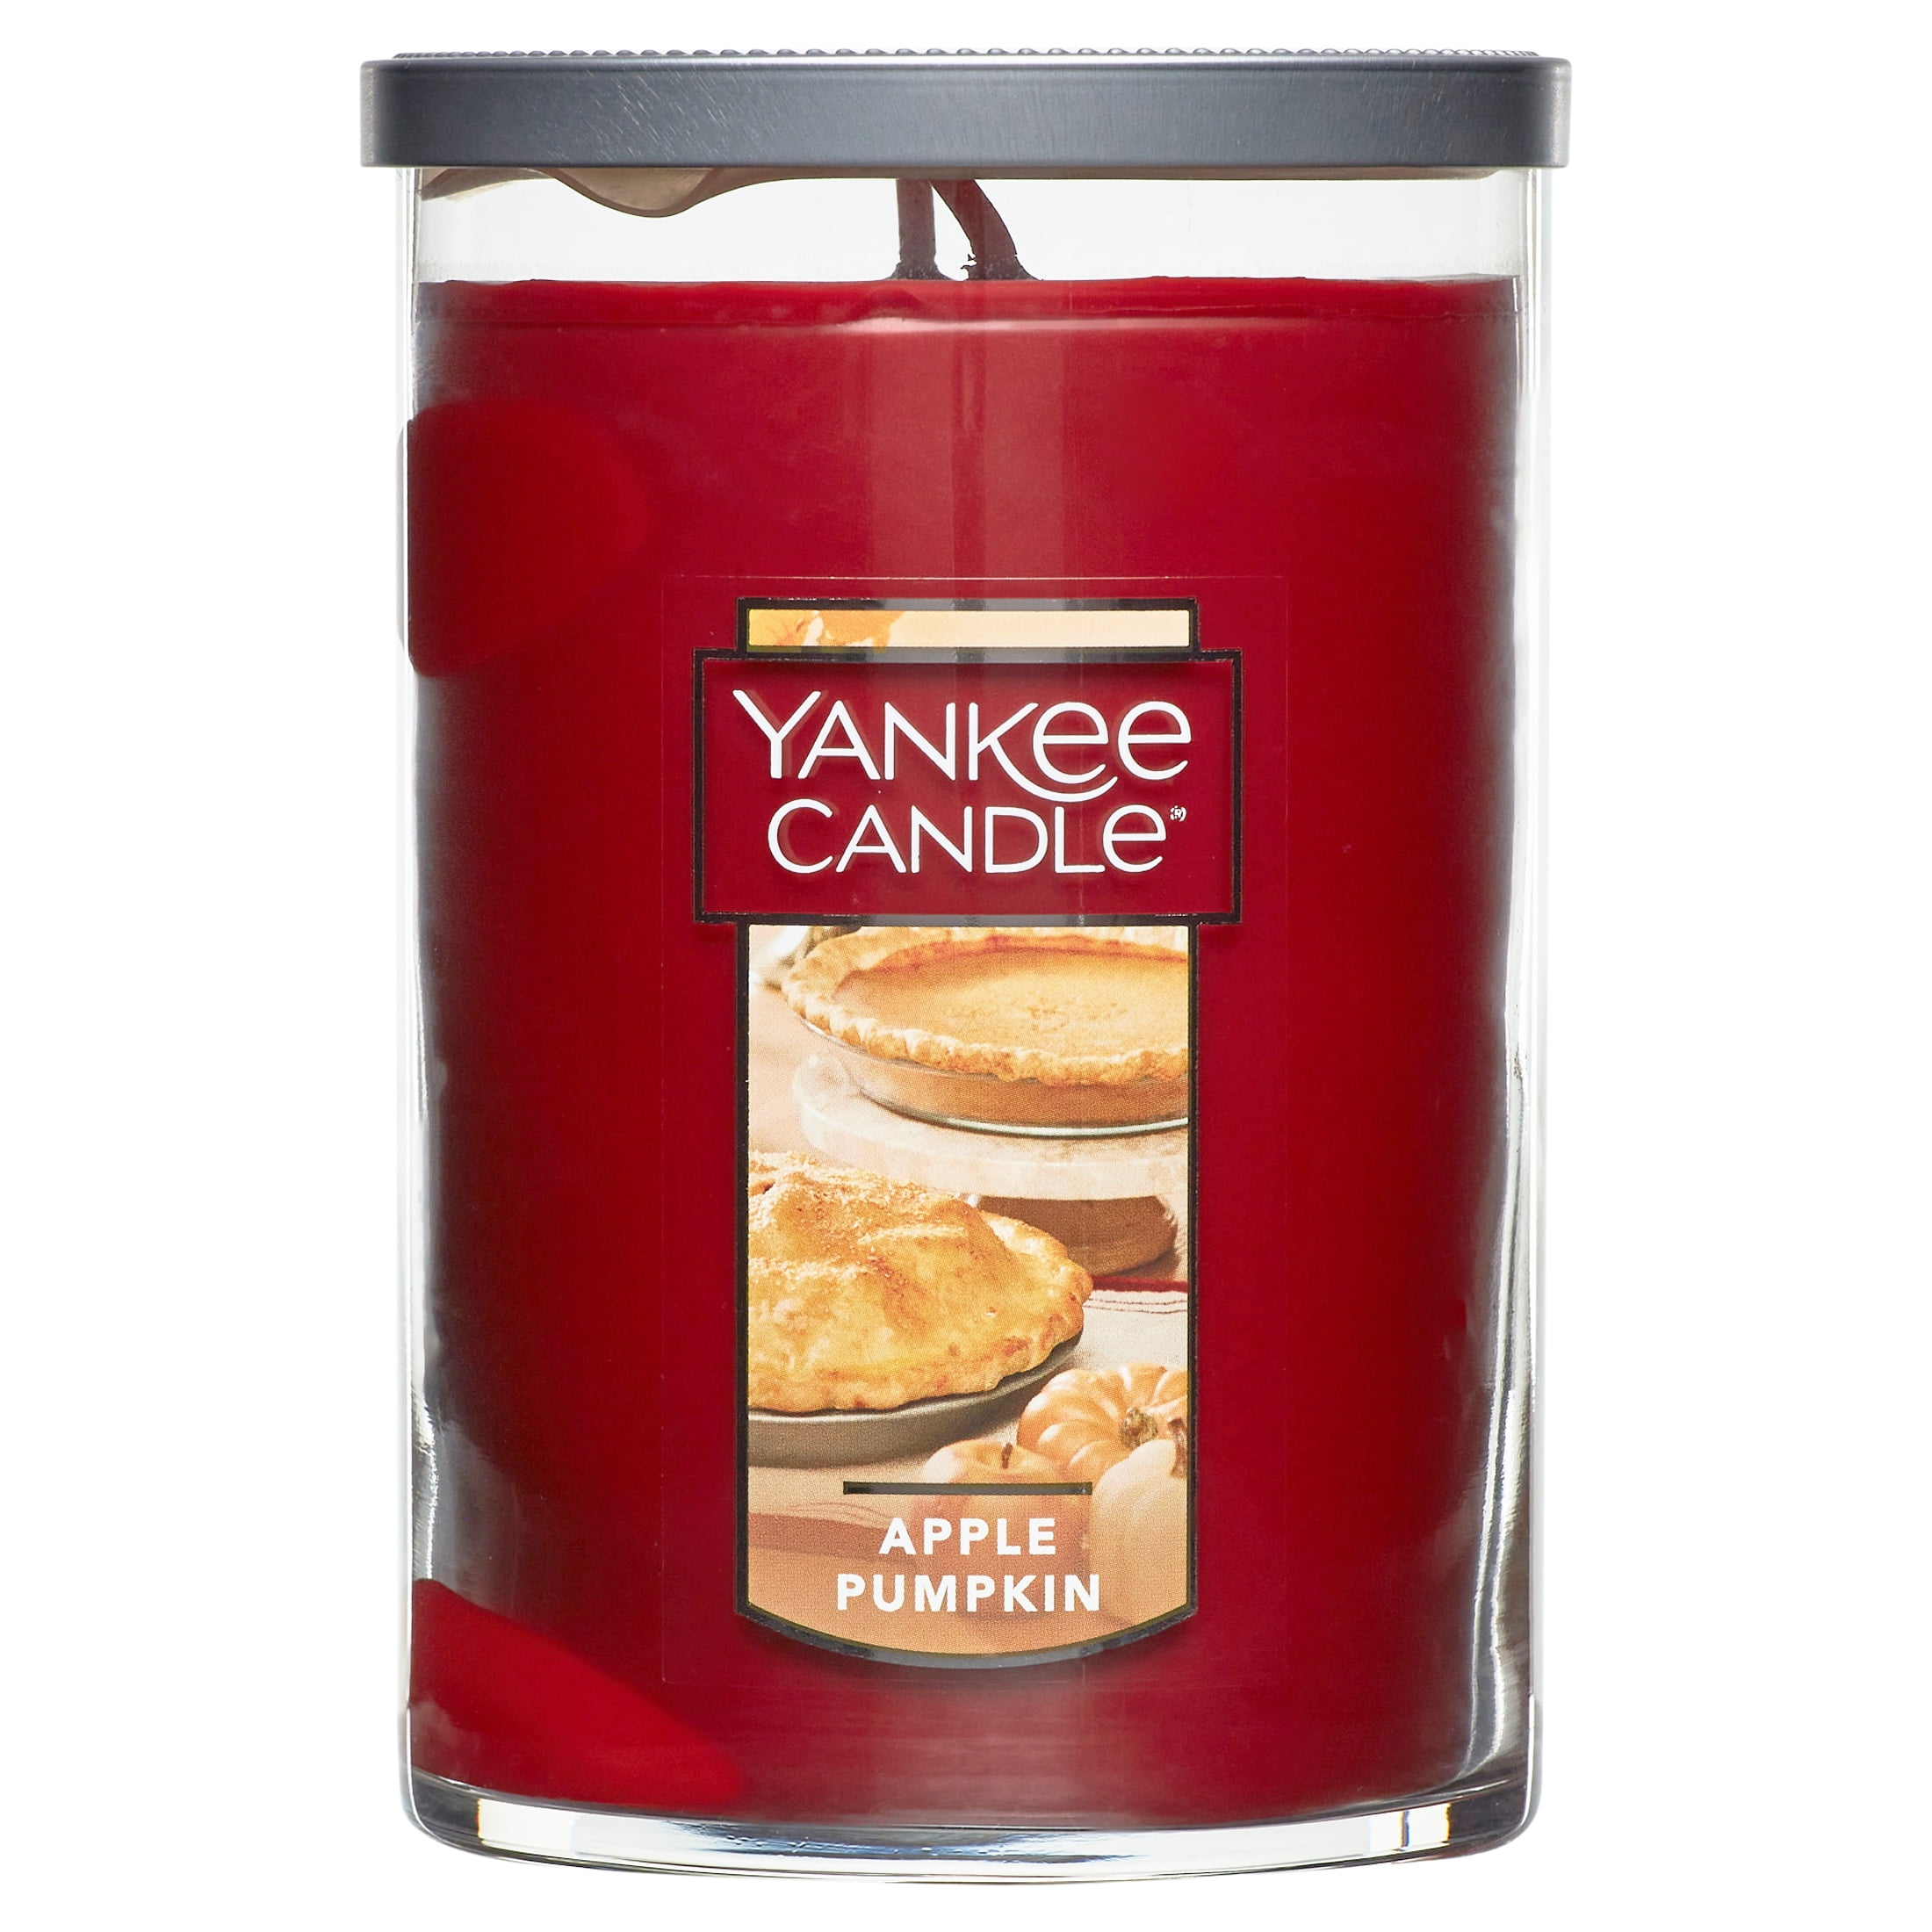 Yankee Candle Pink Sands (22 oz) Delivery - DoorDash